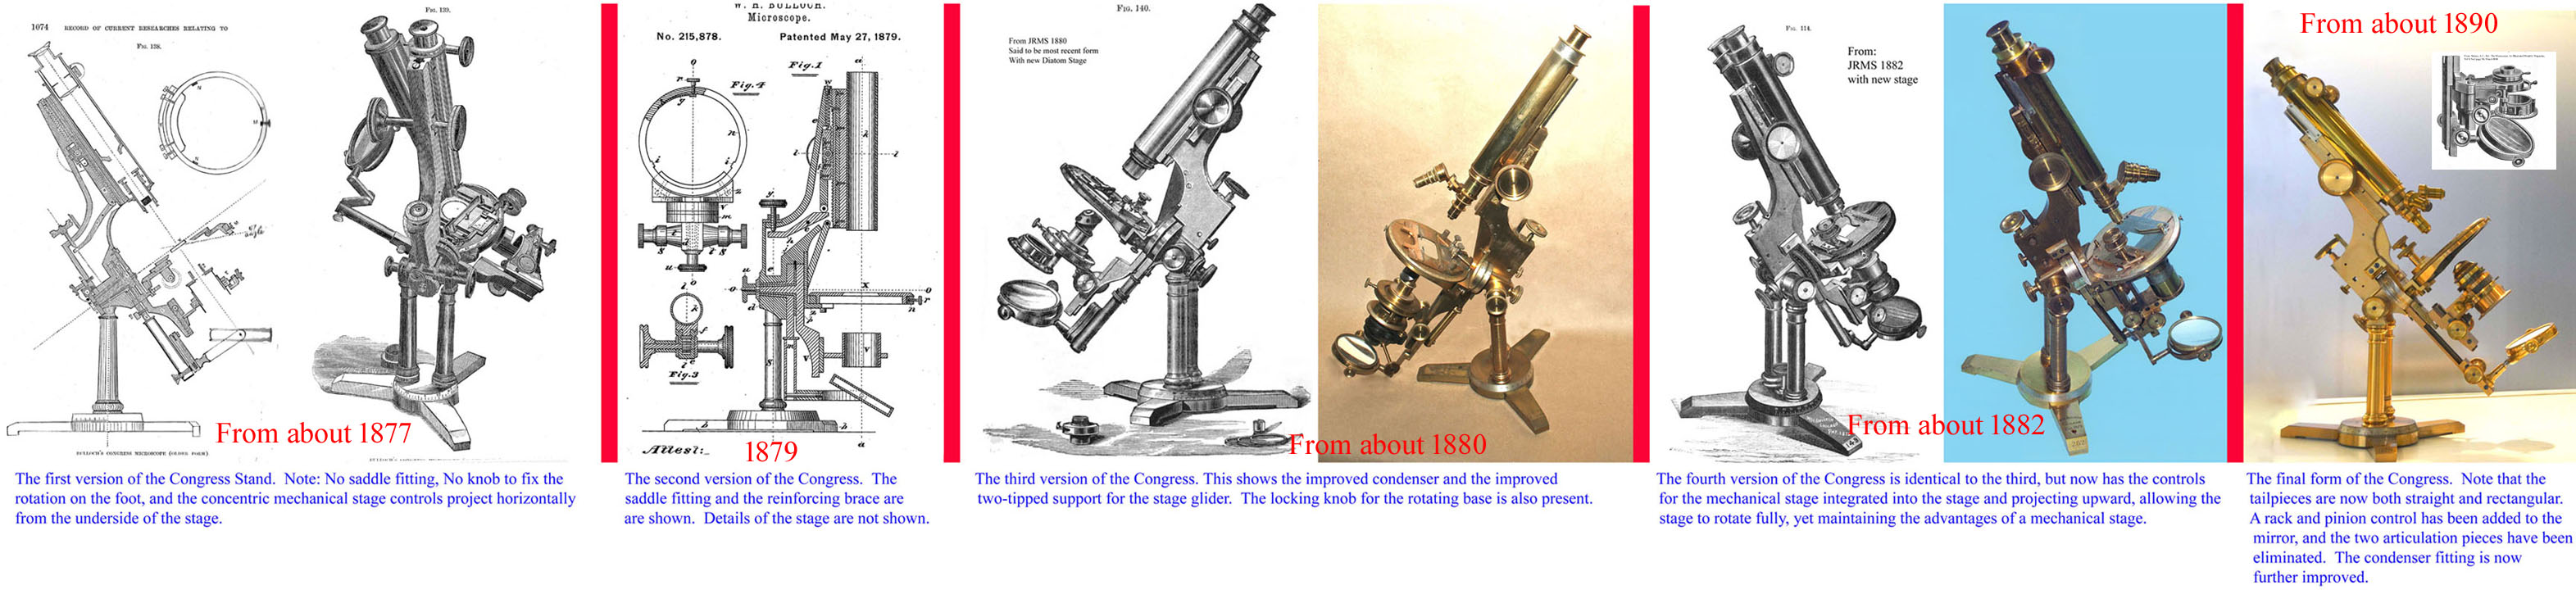 Evolution of the Congress Microscope